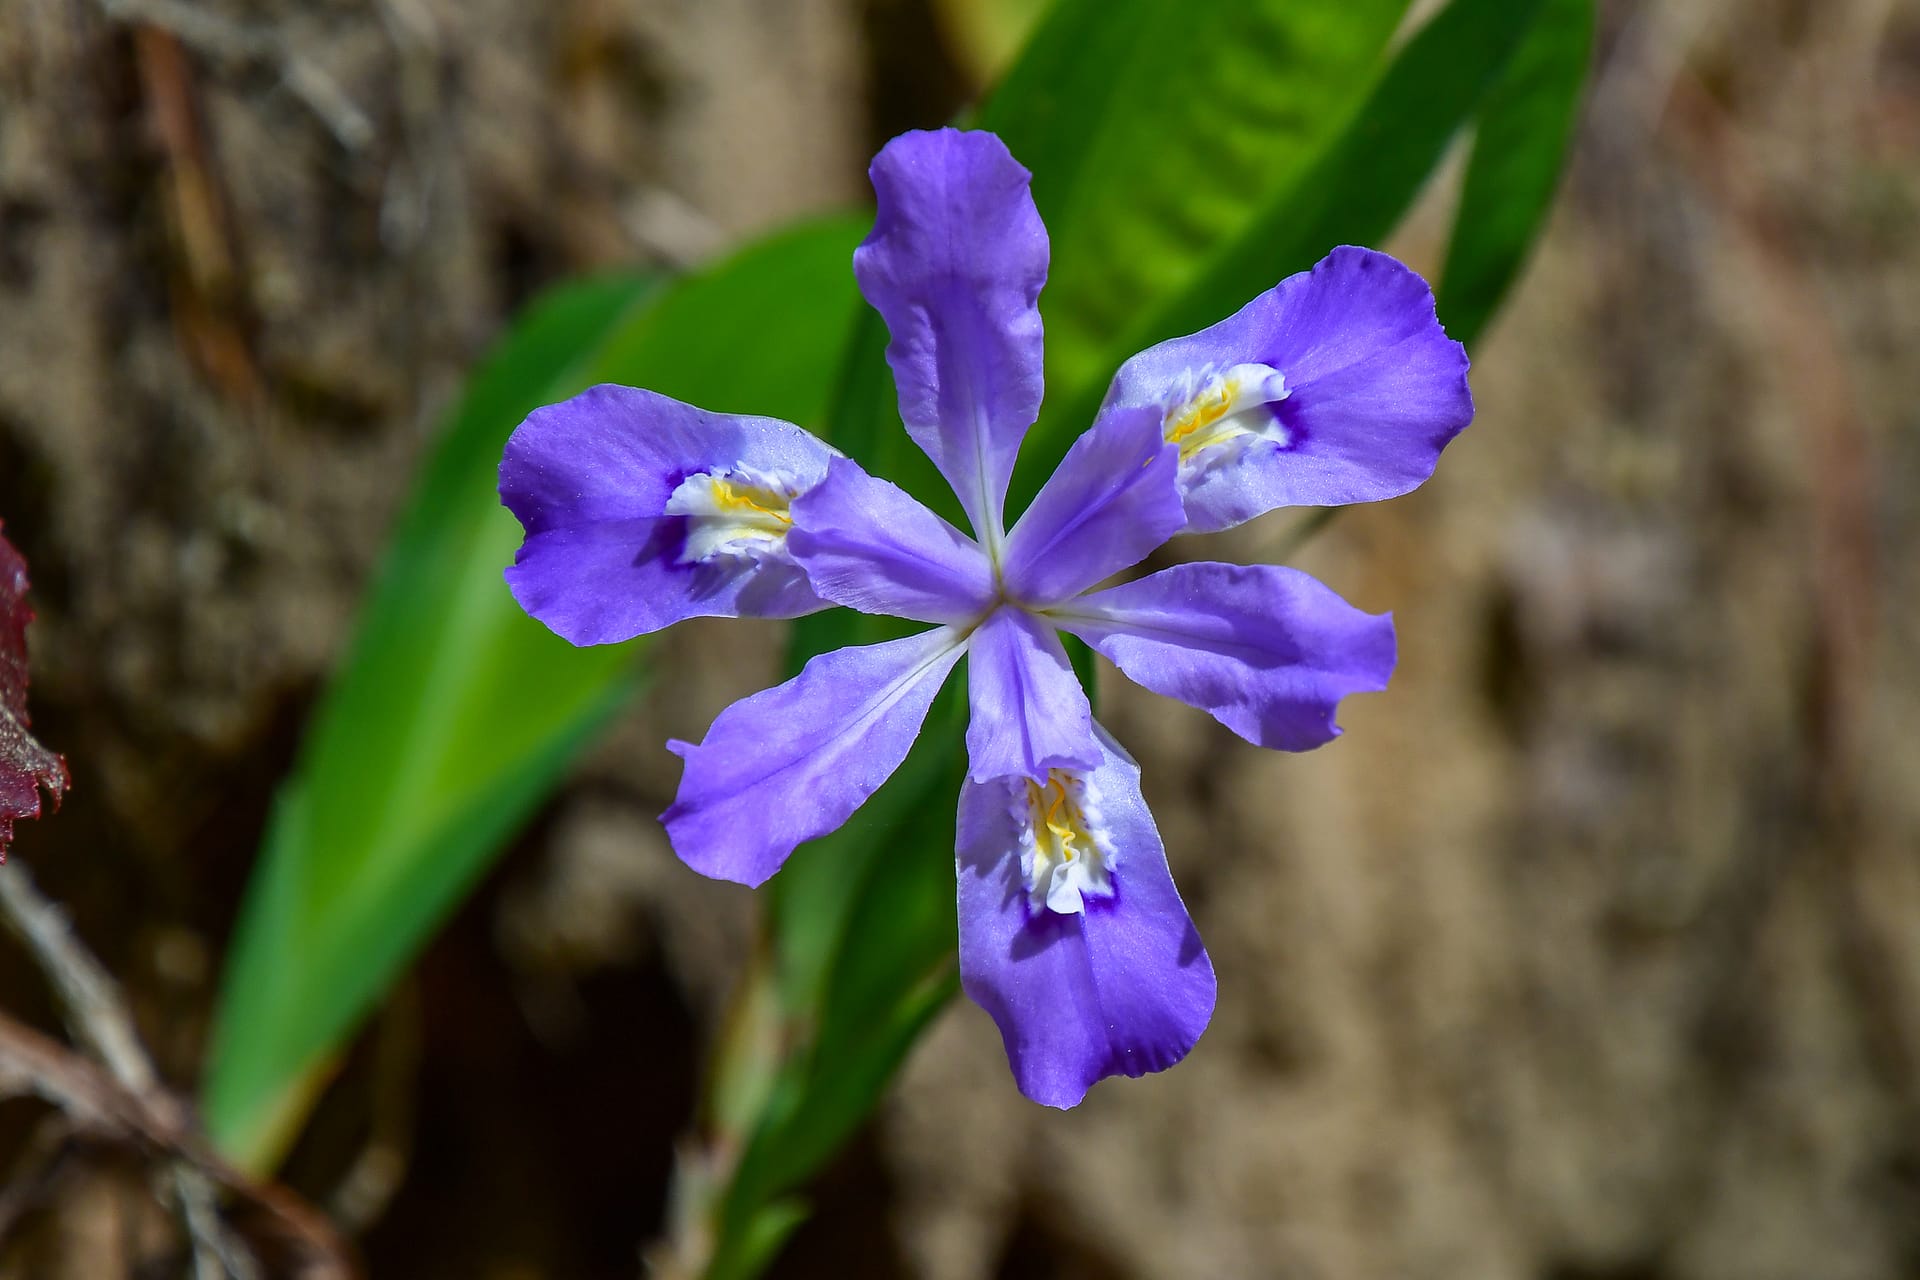 Crested dwarf iris- Ashmore Heritage Preserve